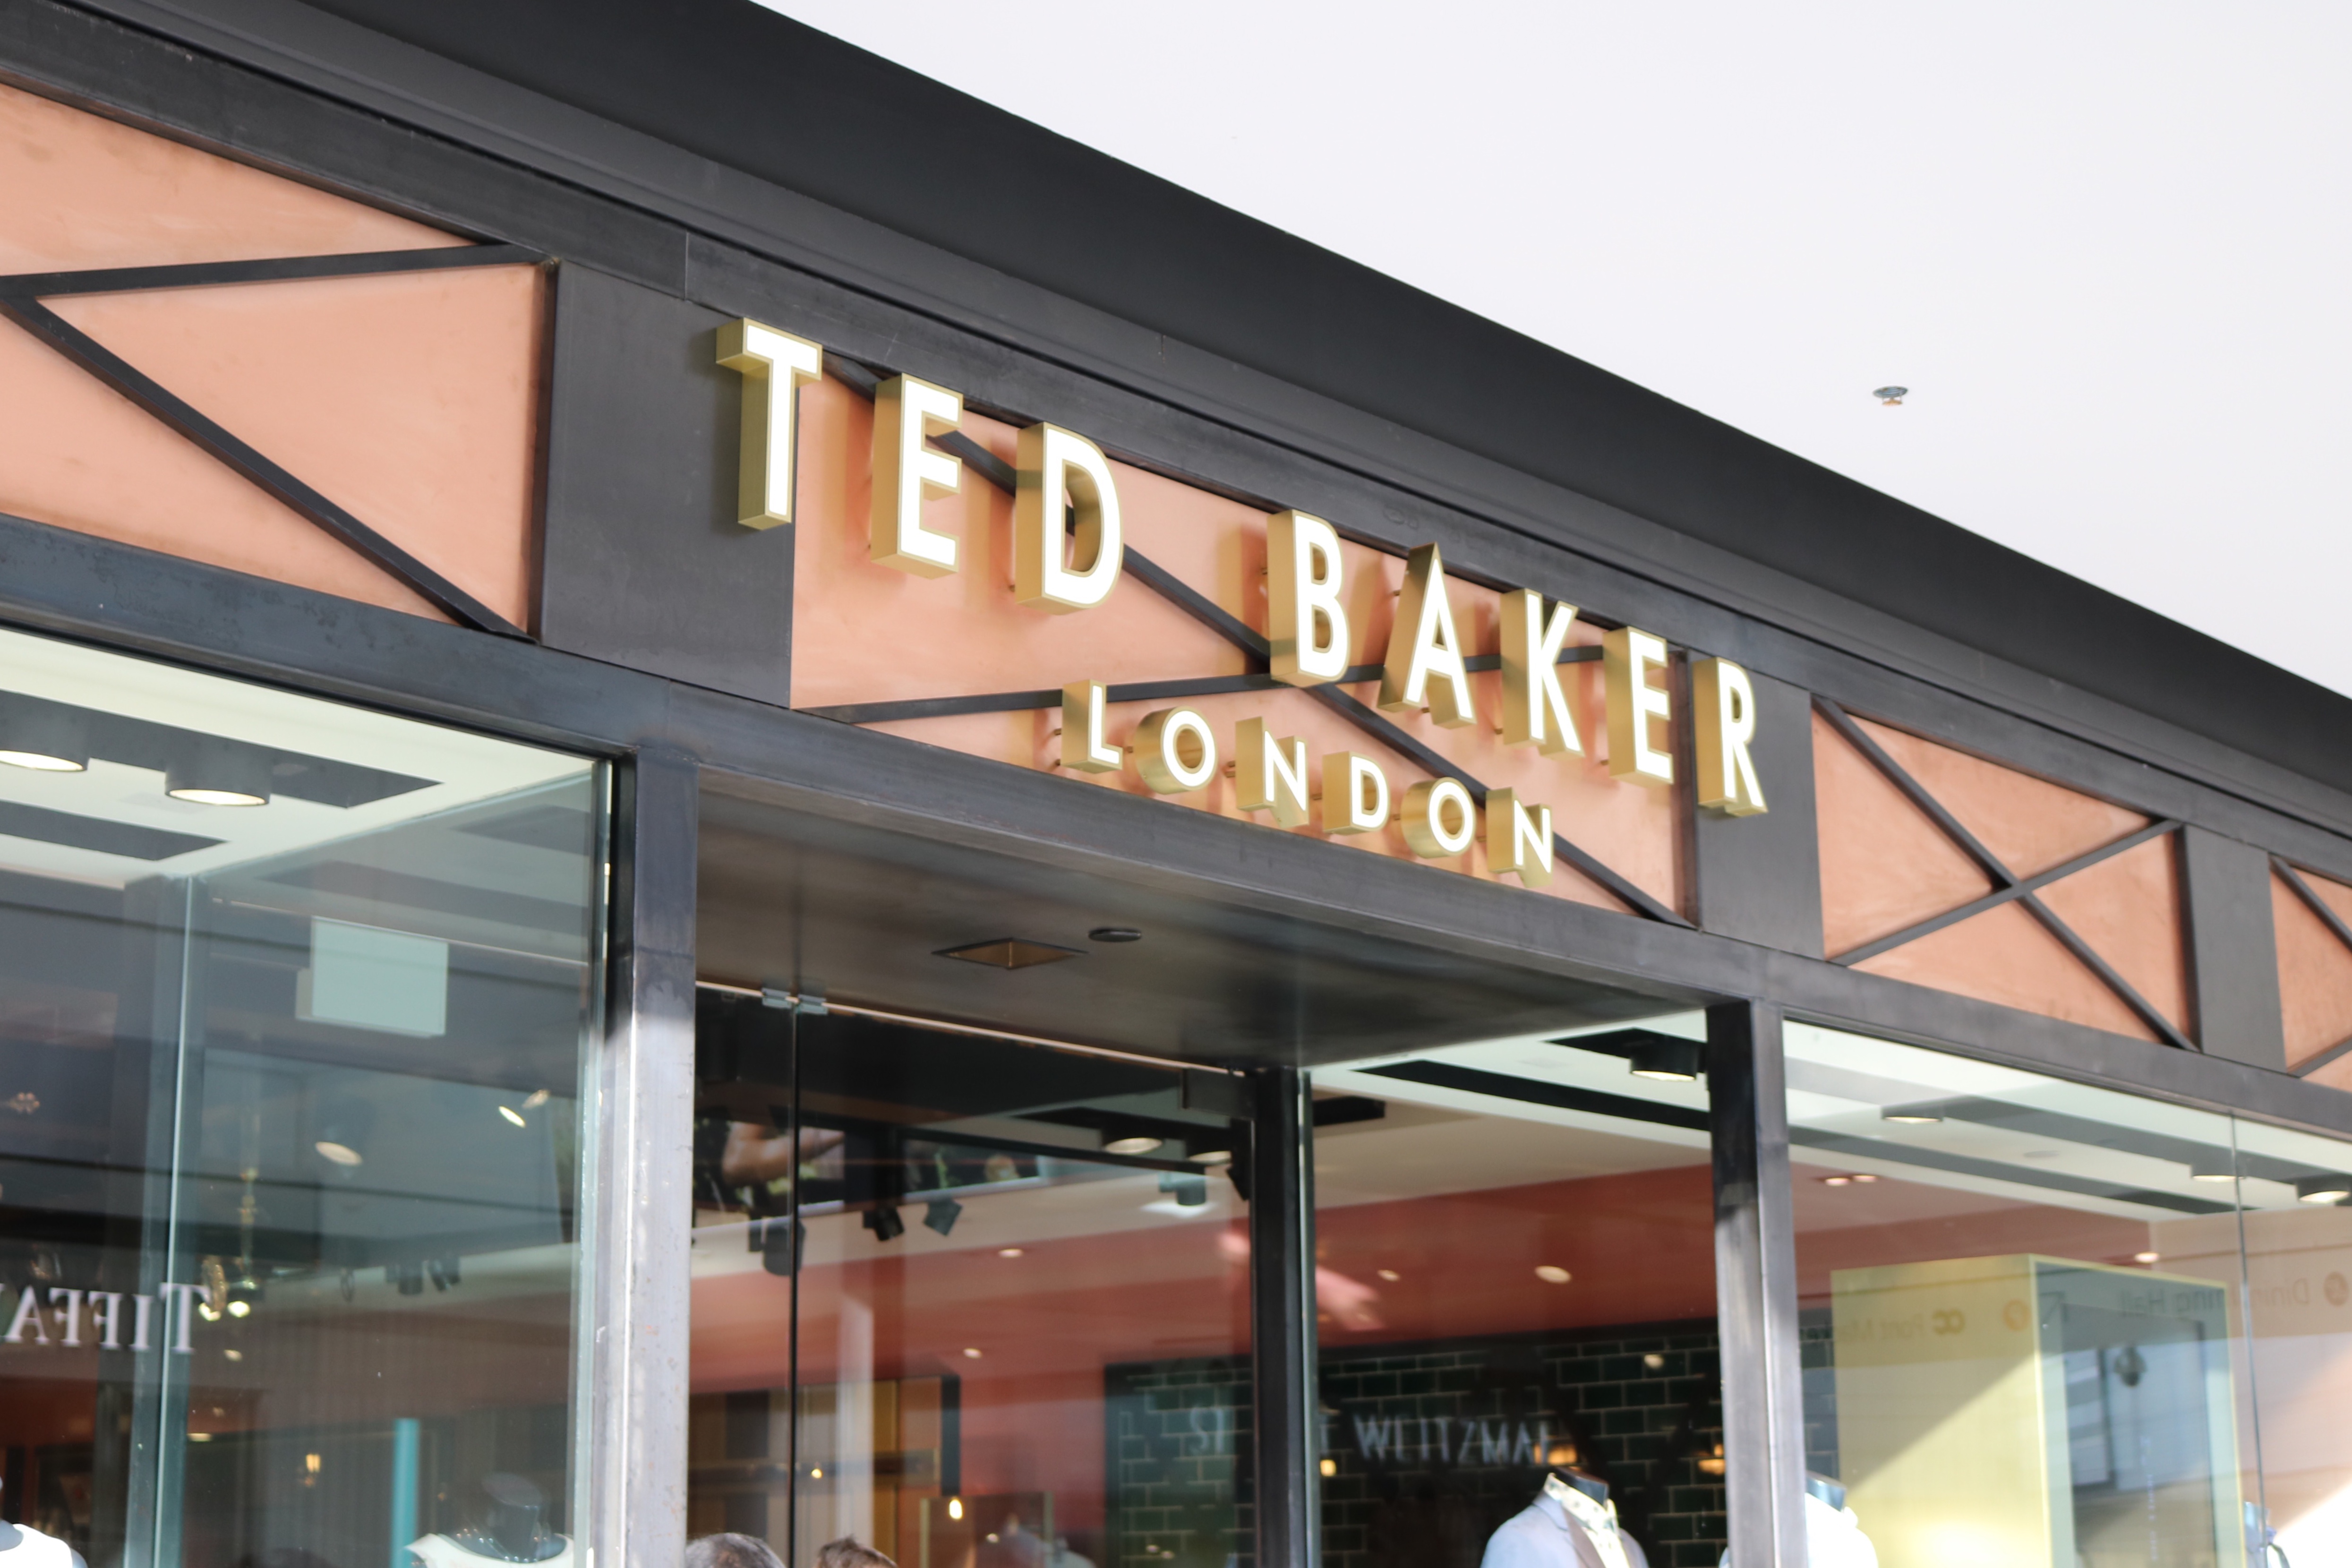 Grand Opening Celebration For Ted Baker London | www.styledomination.com